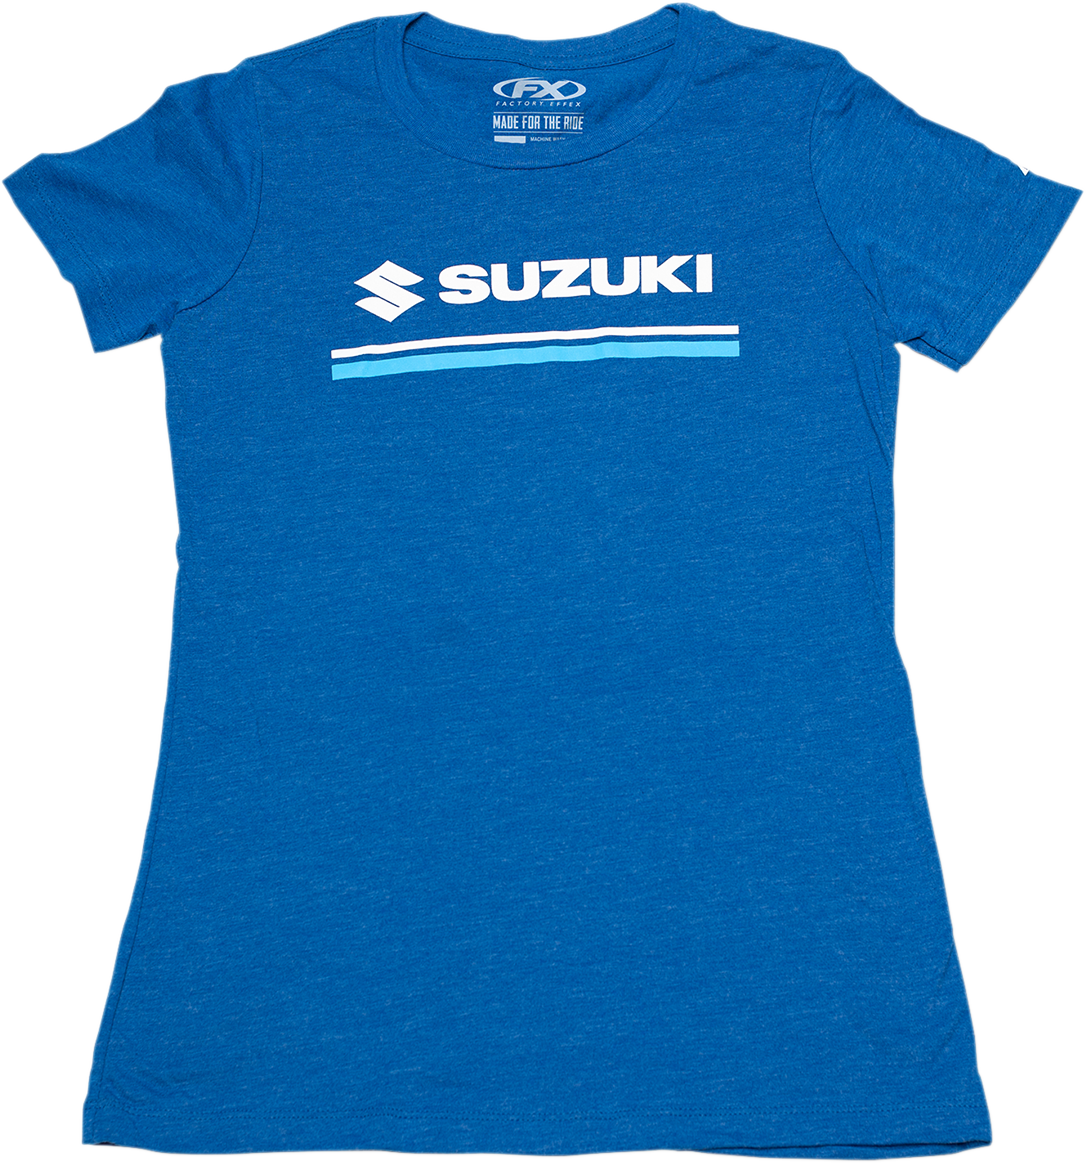 FACTORY EFFEX Women's Suzuki Stripes T-Shirt - Royal Blue - Medium 22-87432